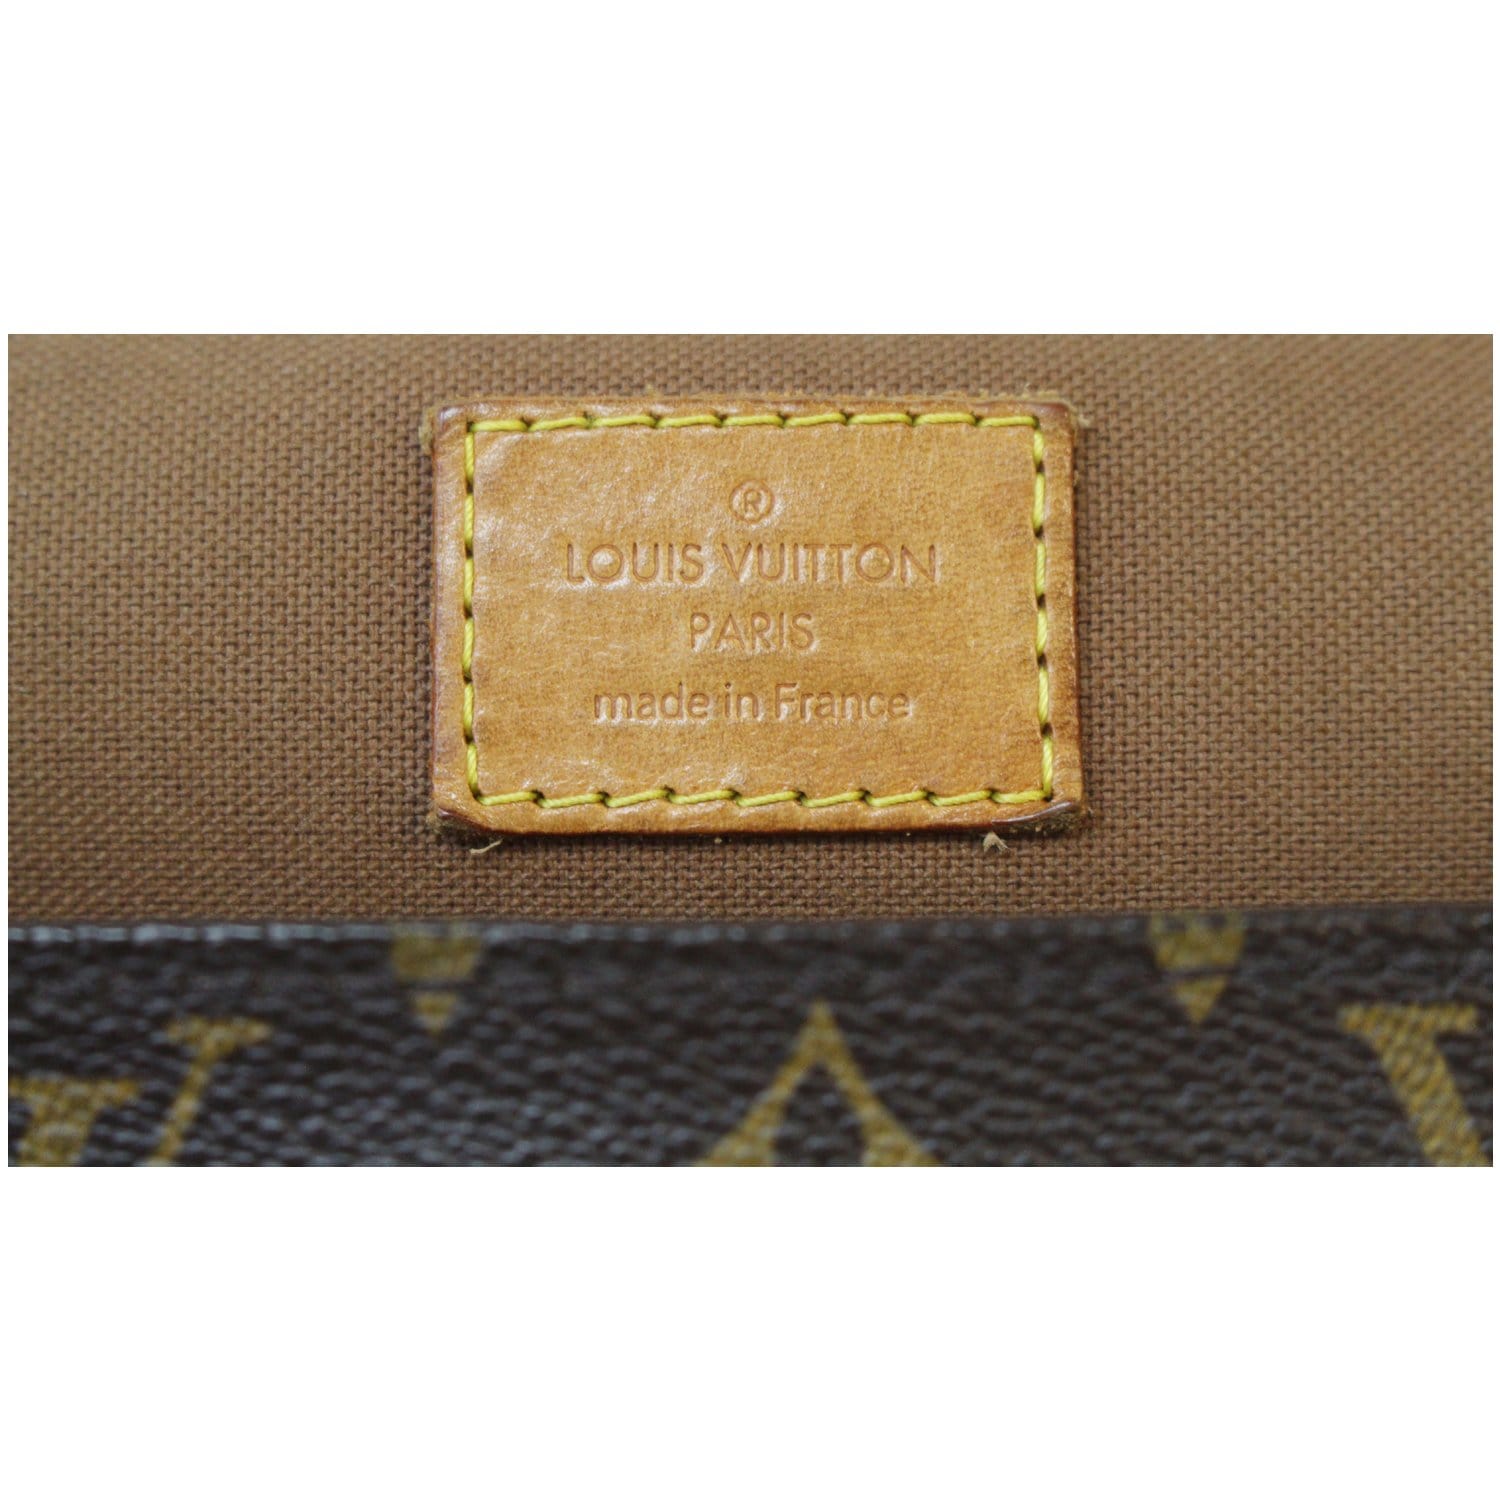 Louis Vuitton Front Button Short Sleeve Brown and Beige Monogram